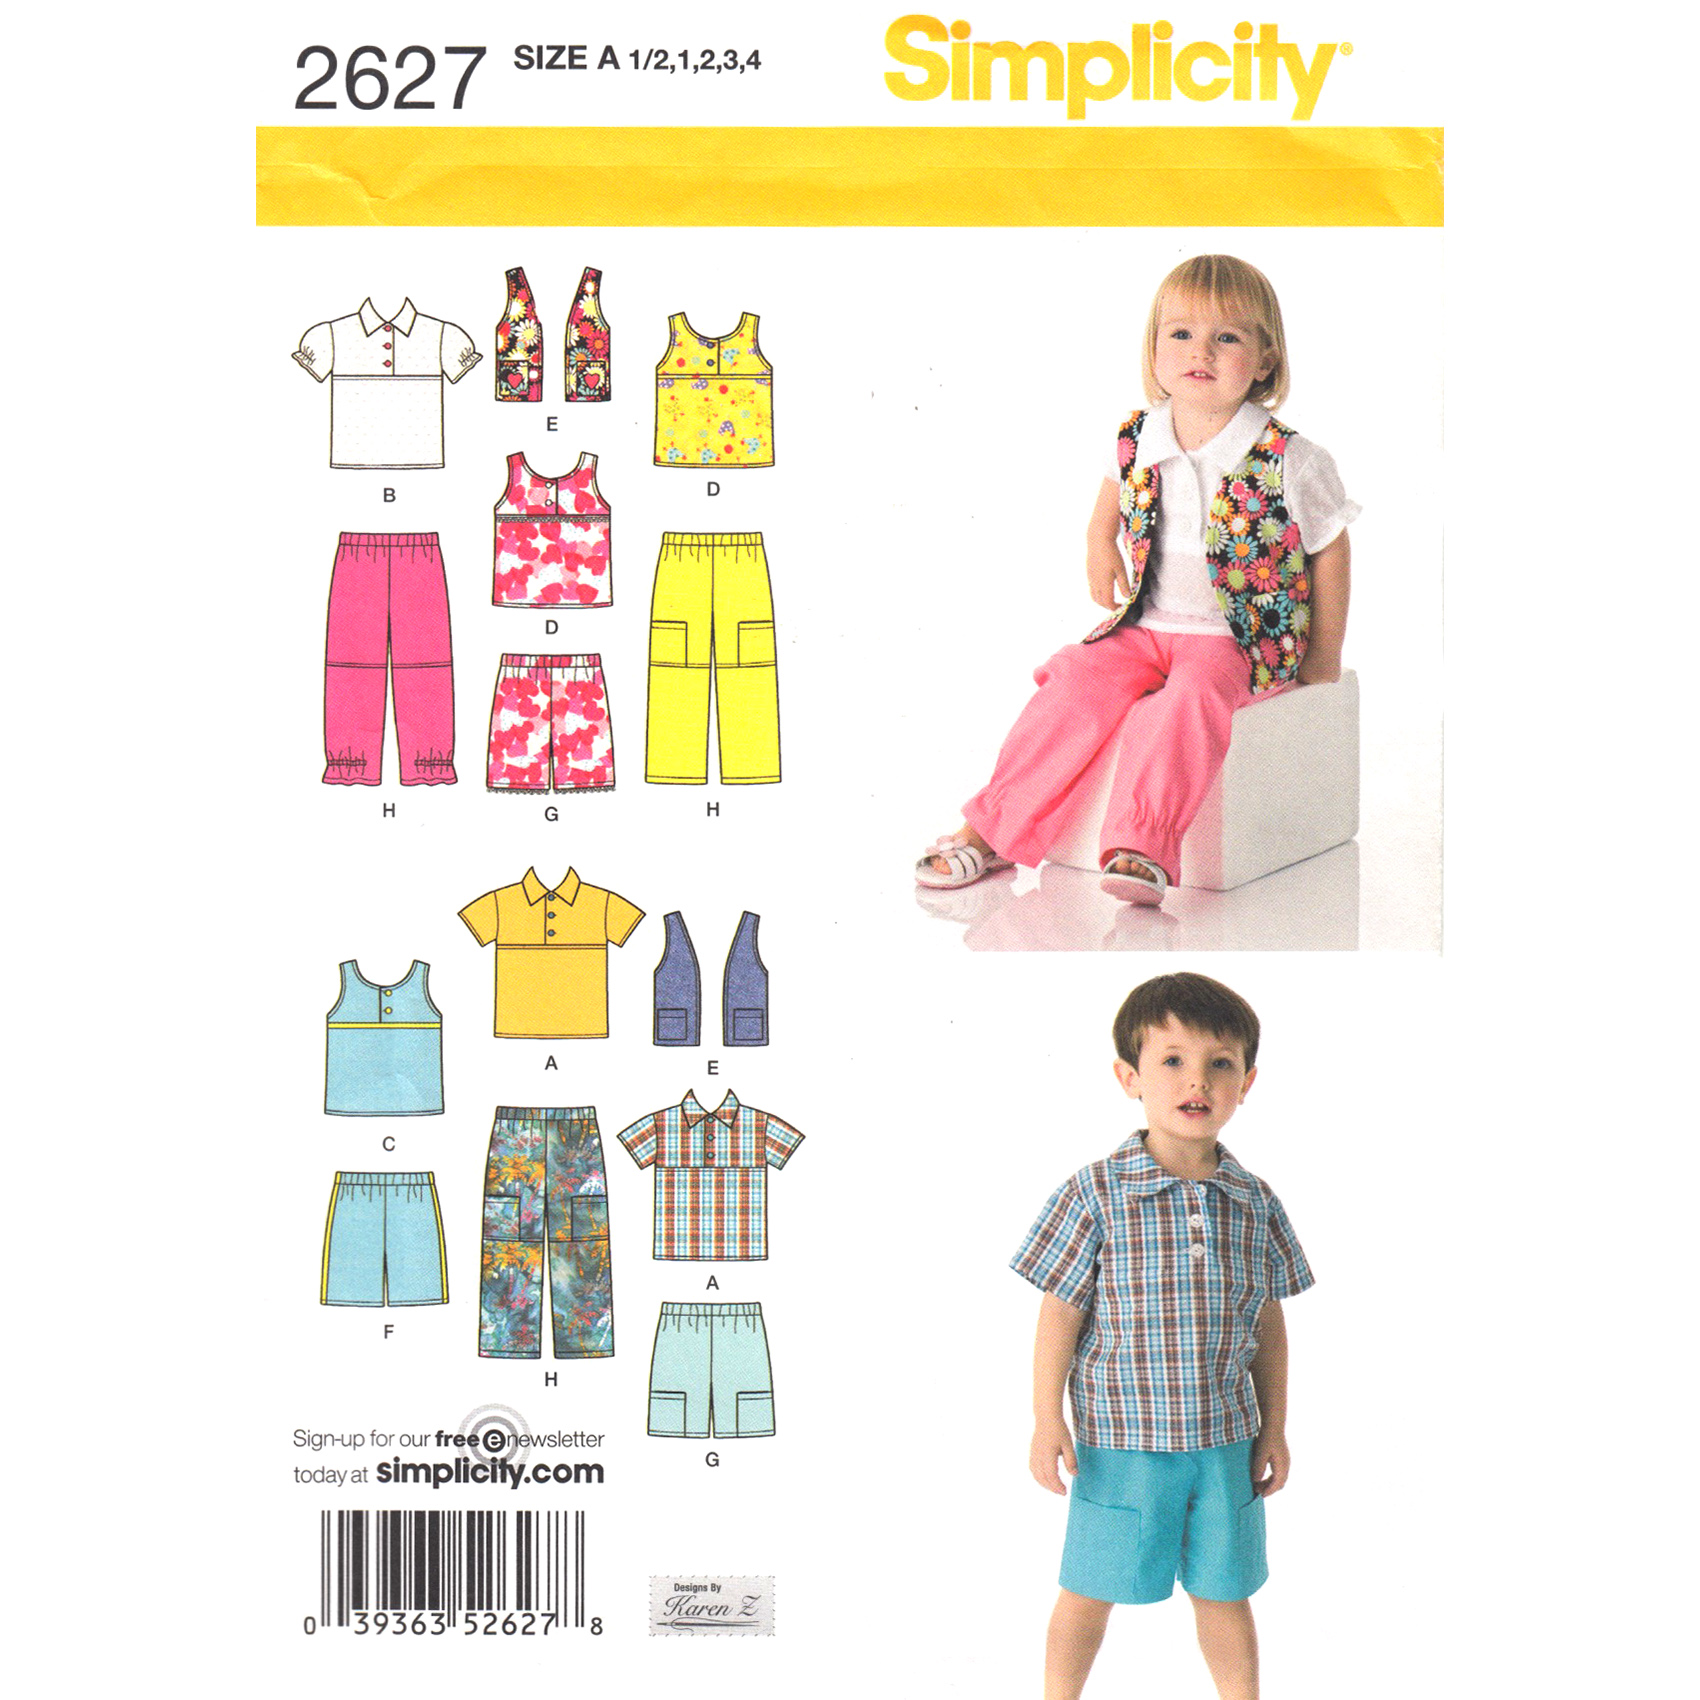 Simplicity 2627 kids pattern